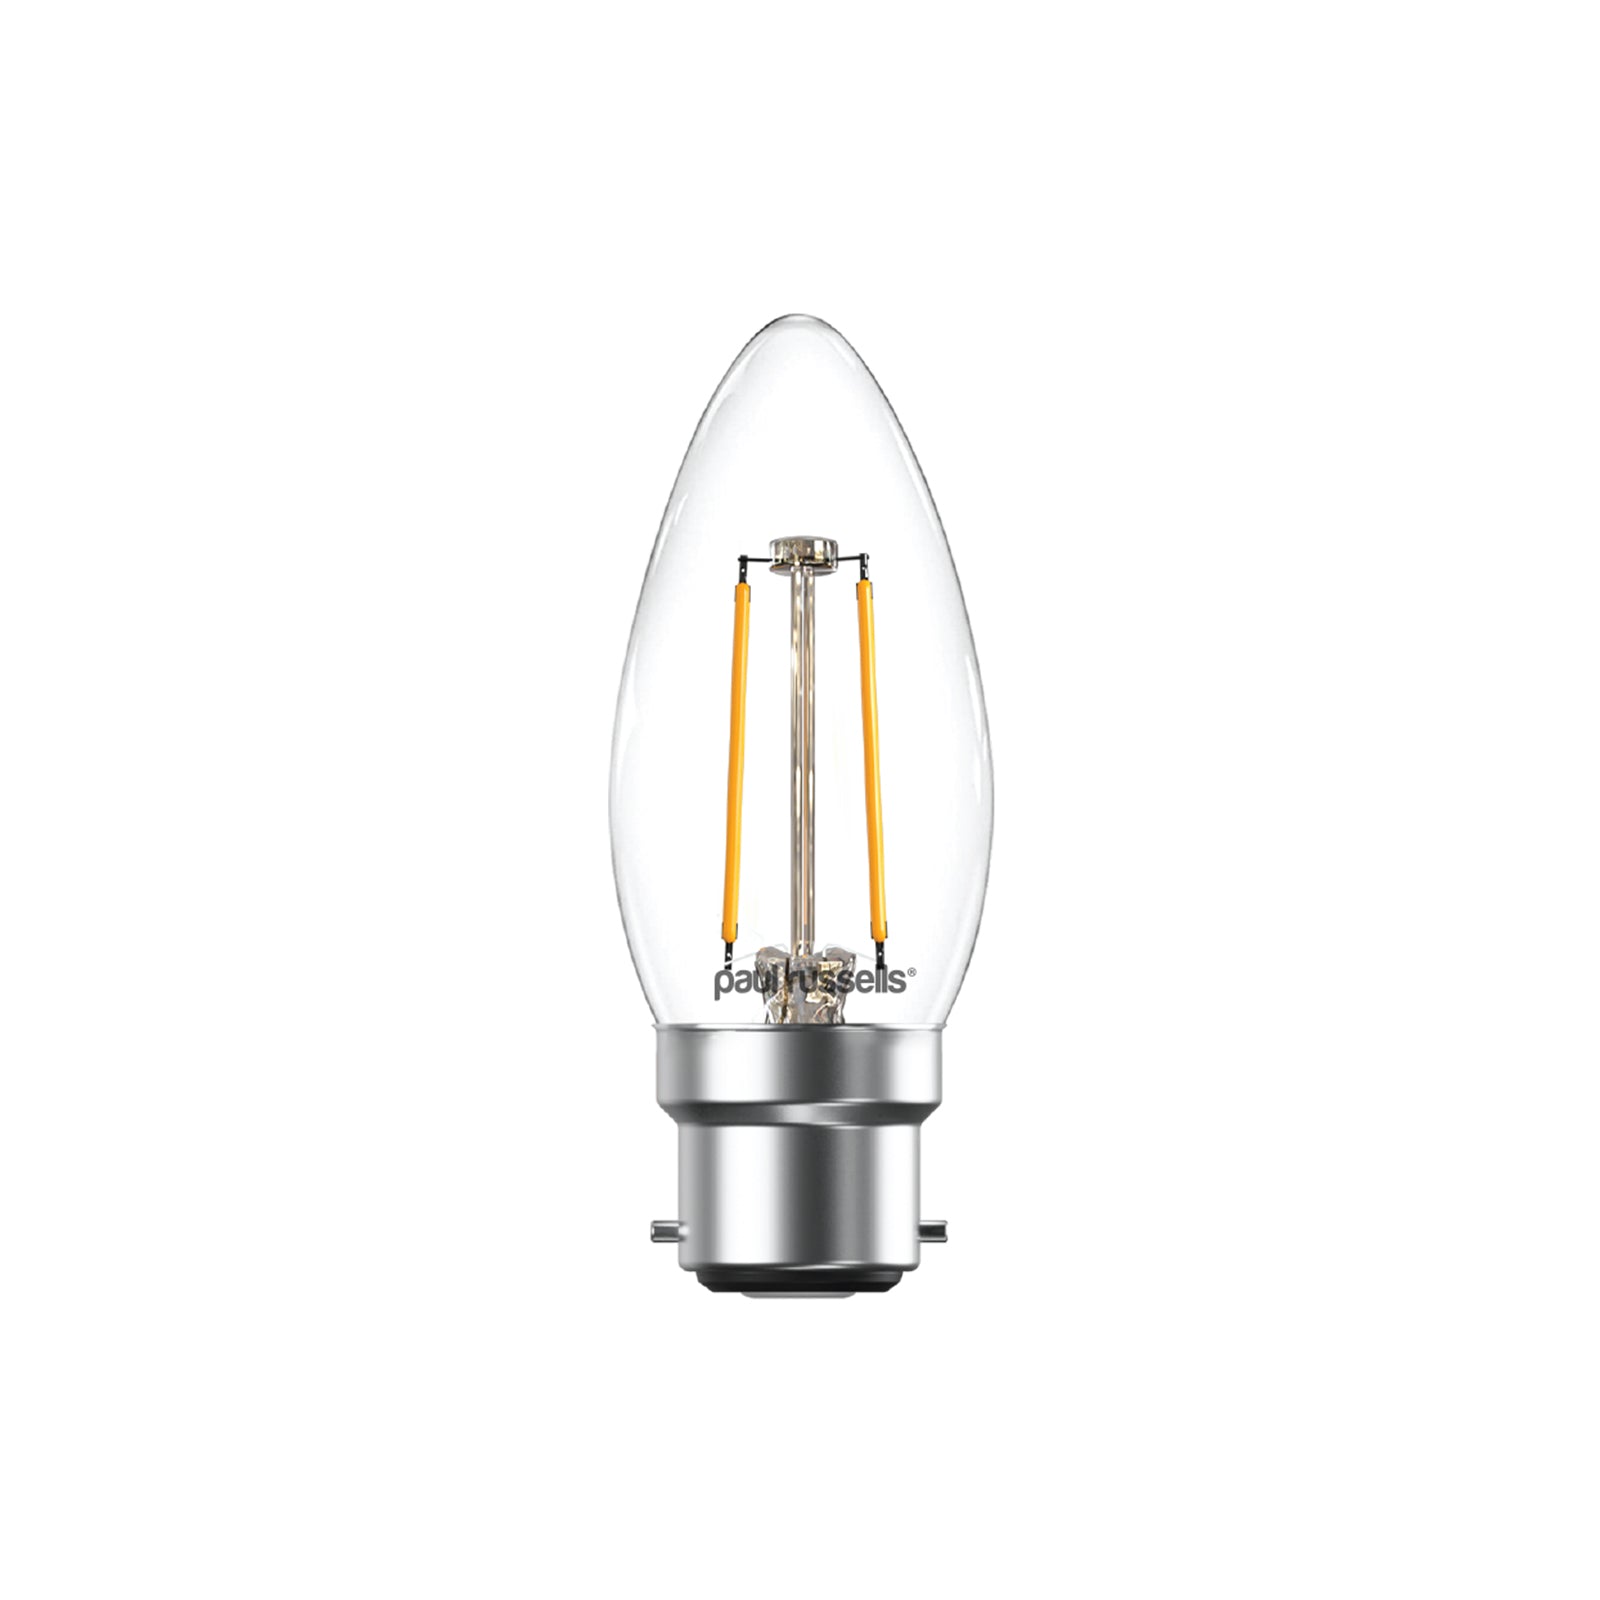 LED Filament Candle 2.5W (25w), BC/B22, 250 Lumens, Warm White(2700K), 240V